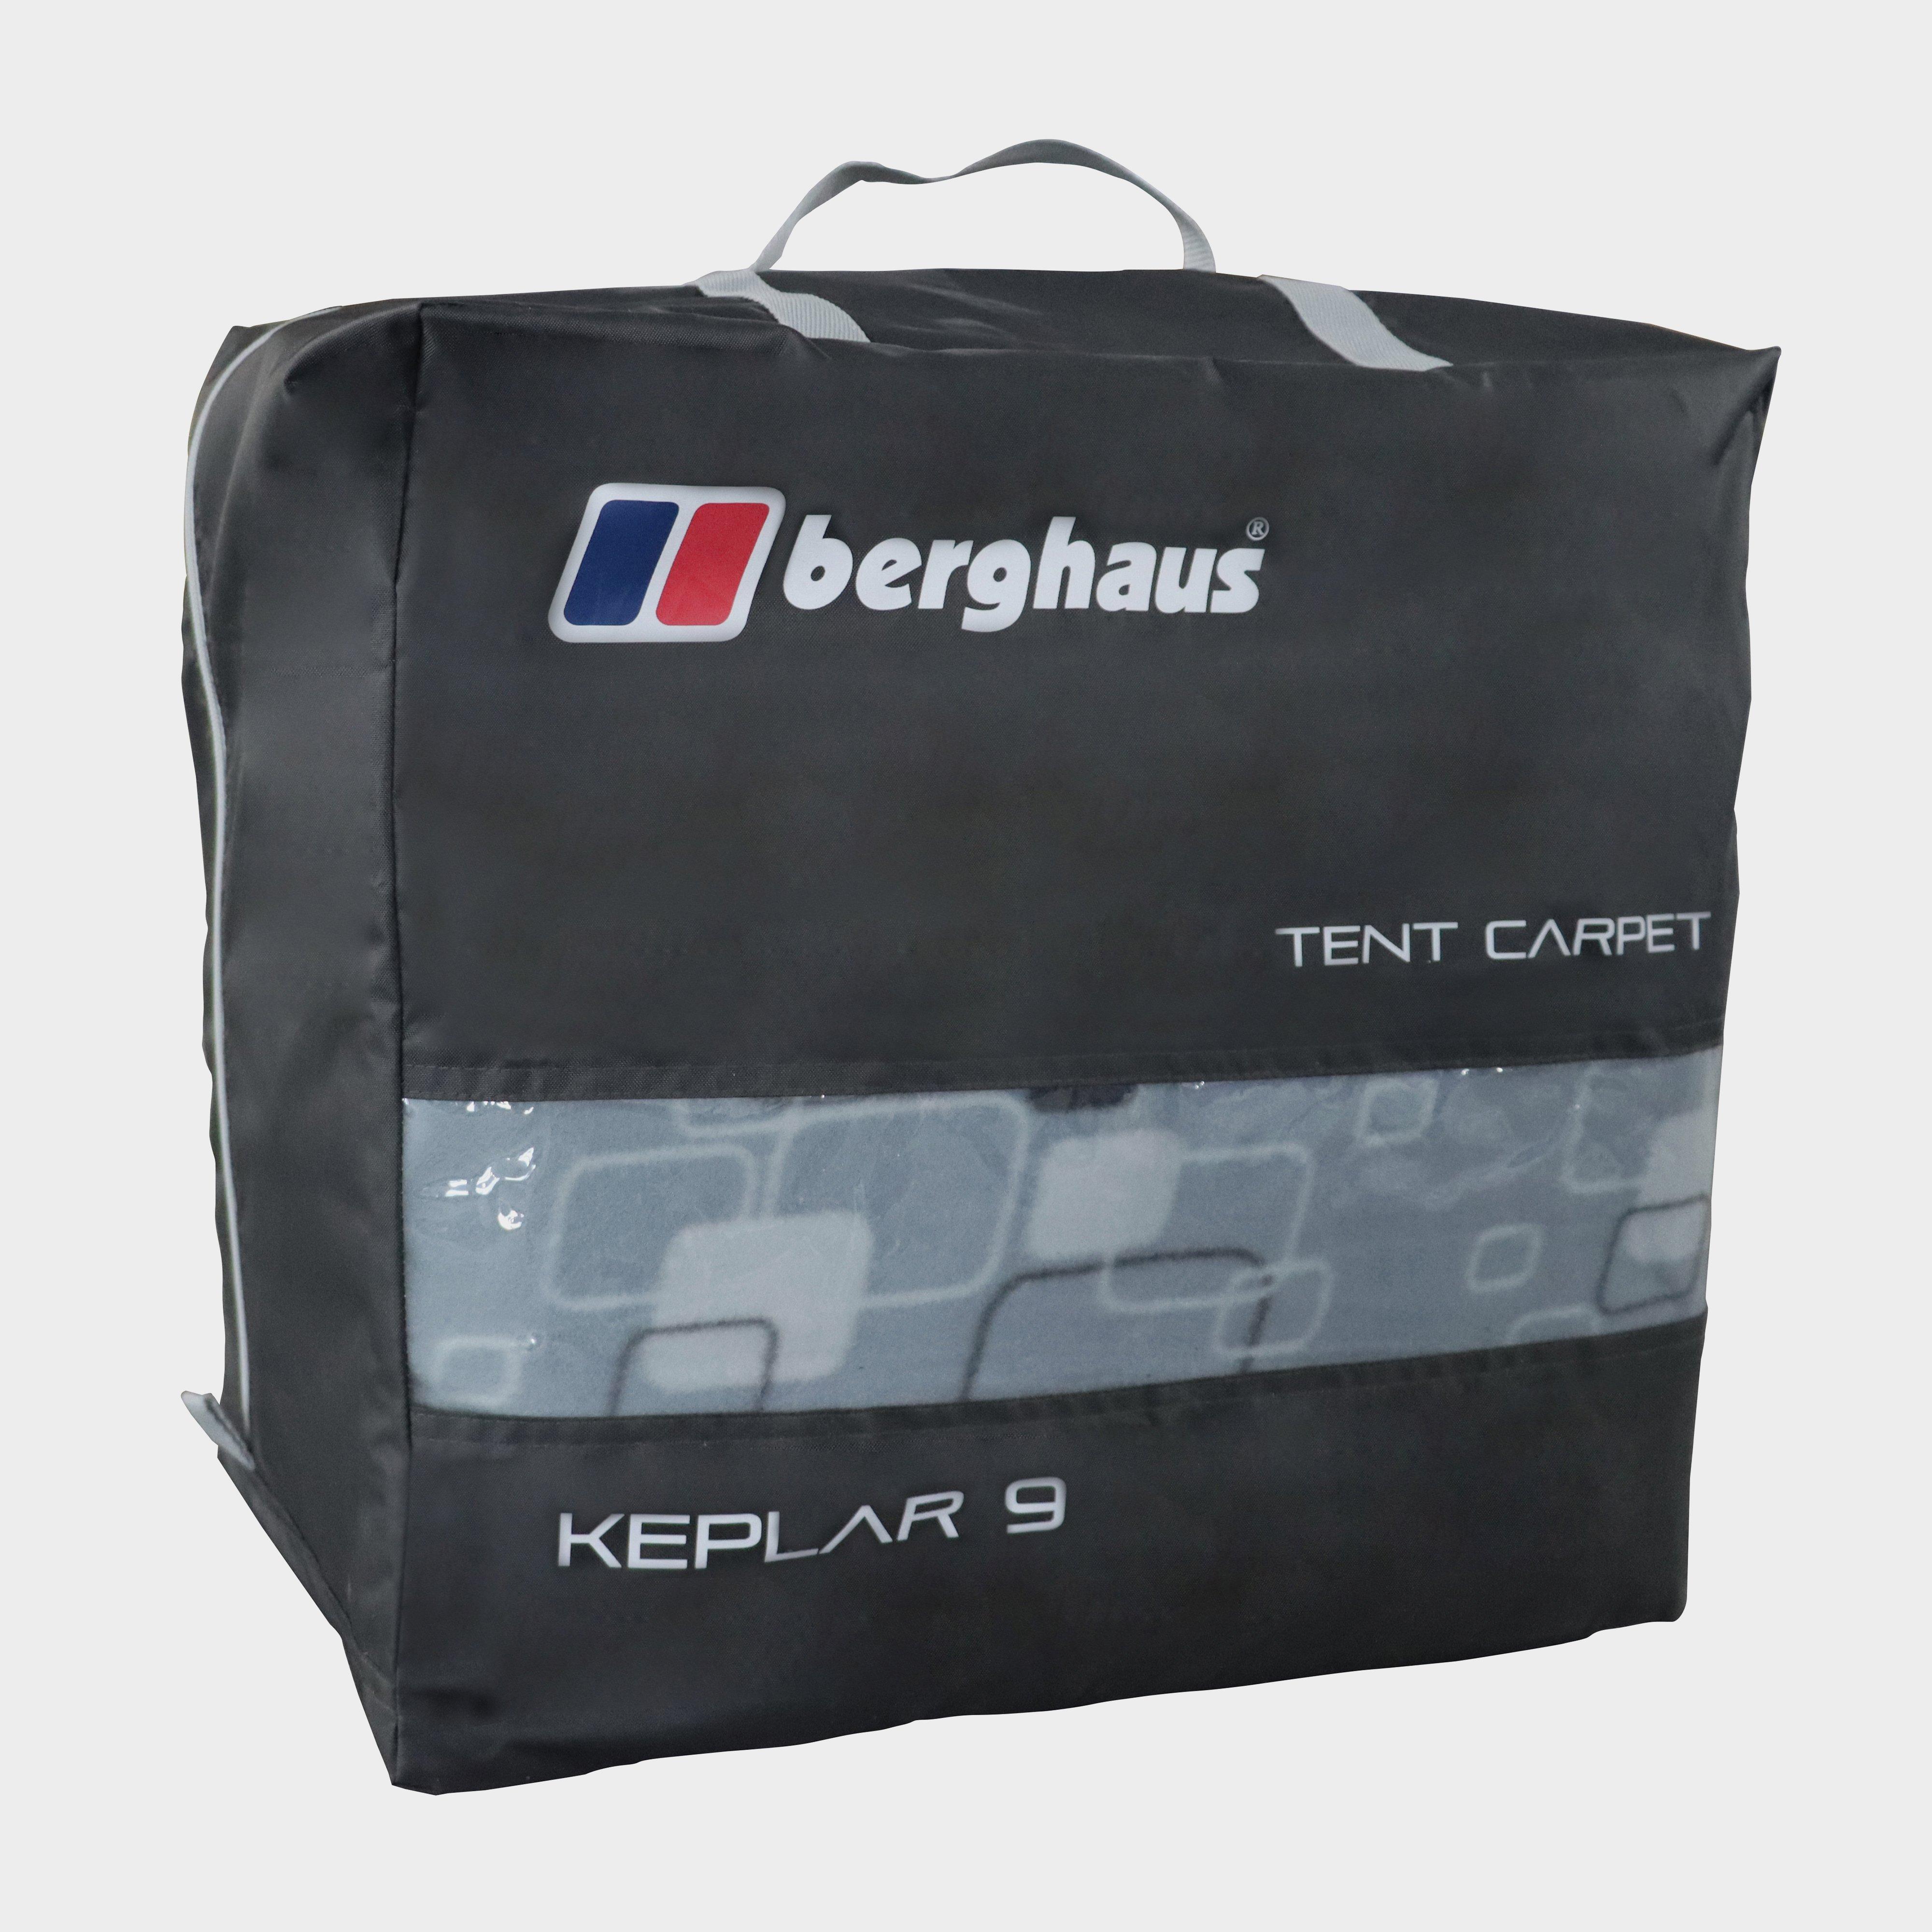 Berghaus Kepler 9 Tent Carpet - Multi/mul  Multi/mul